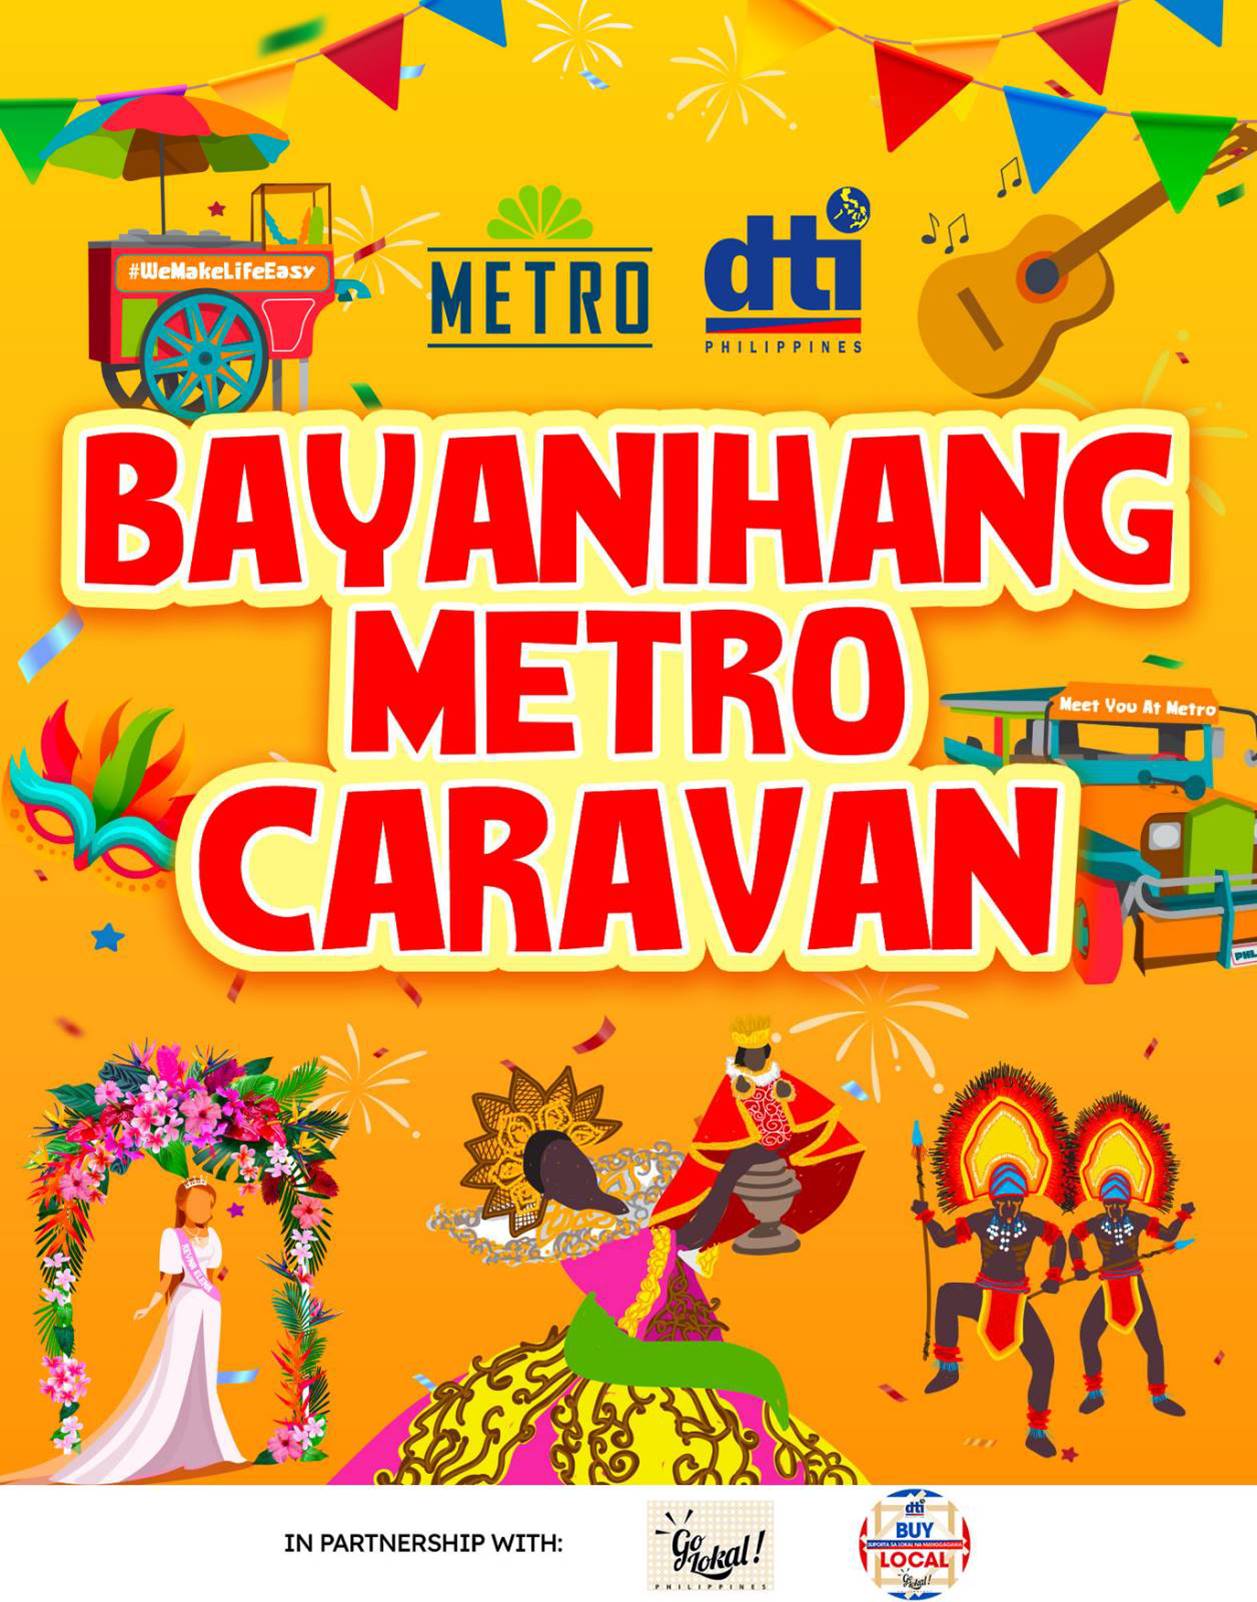 Metro Retail Stores nurtures local entrepreneurs through Bayanihang Metro Caravan